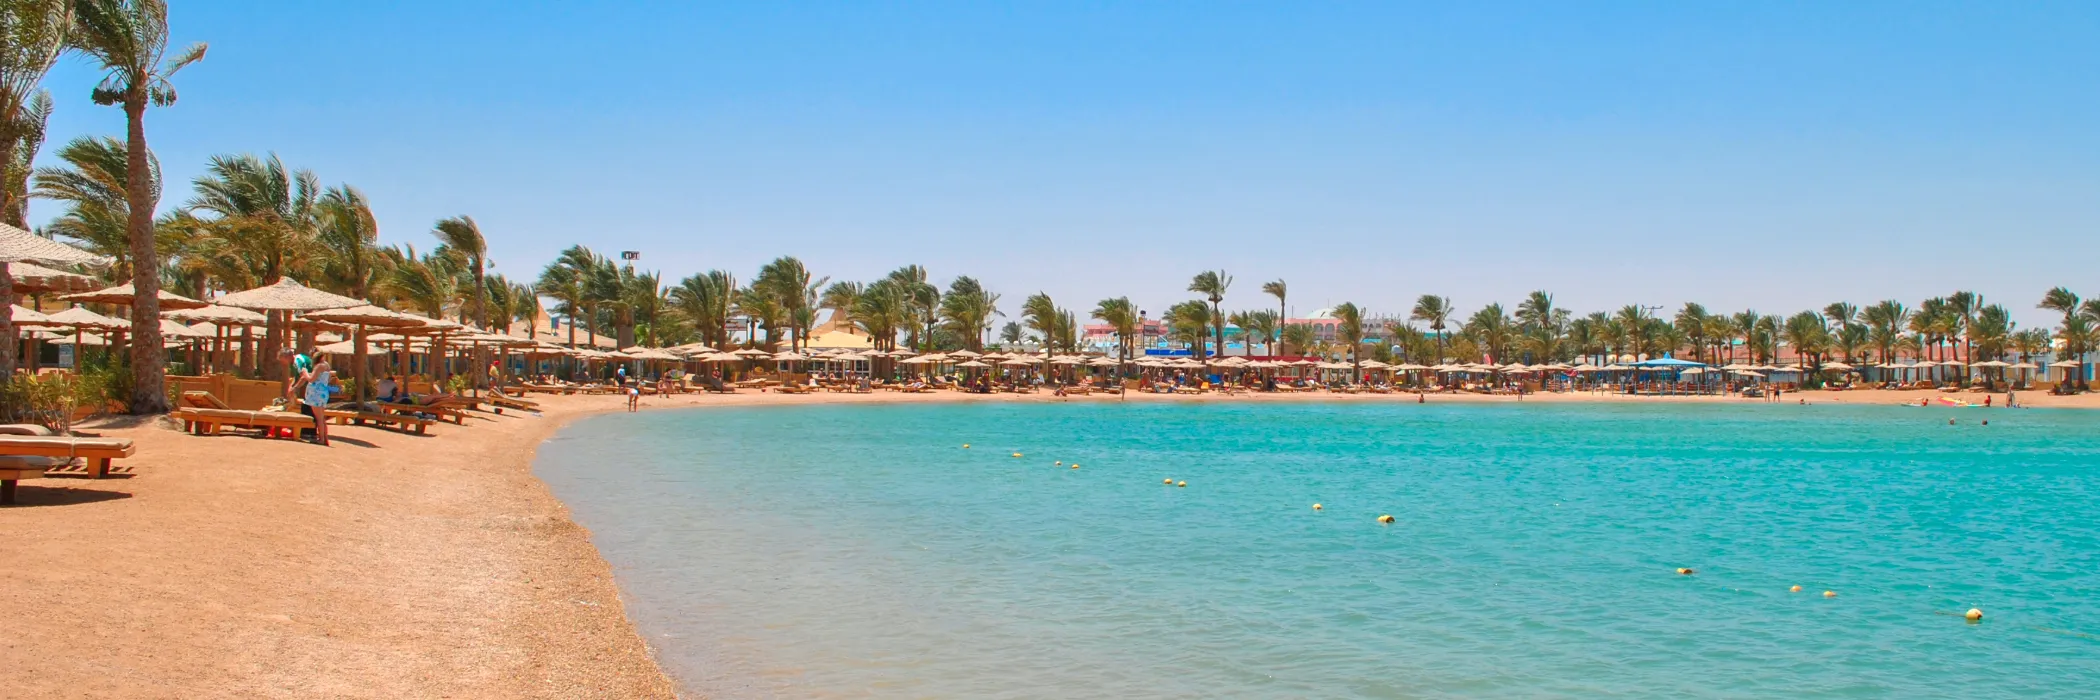 Hurghada - All inclusive holidays under £500 per person